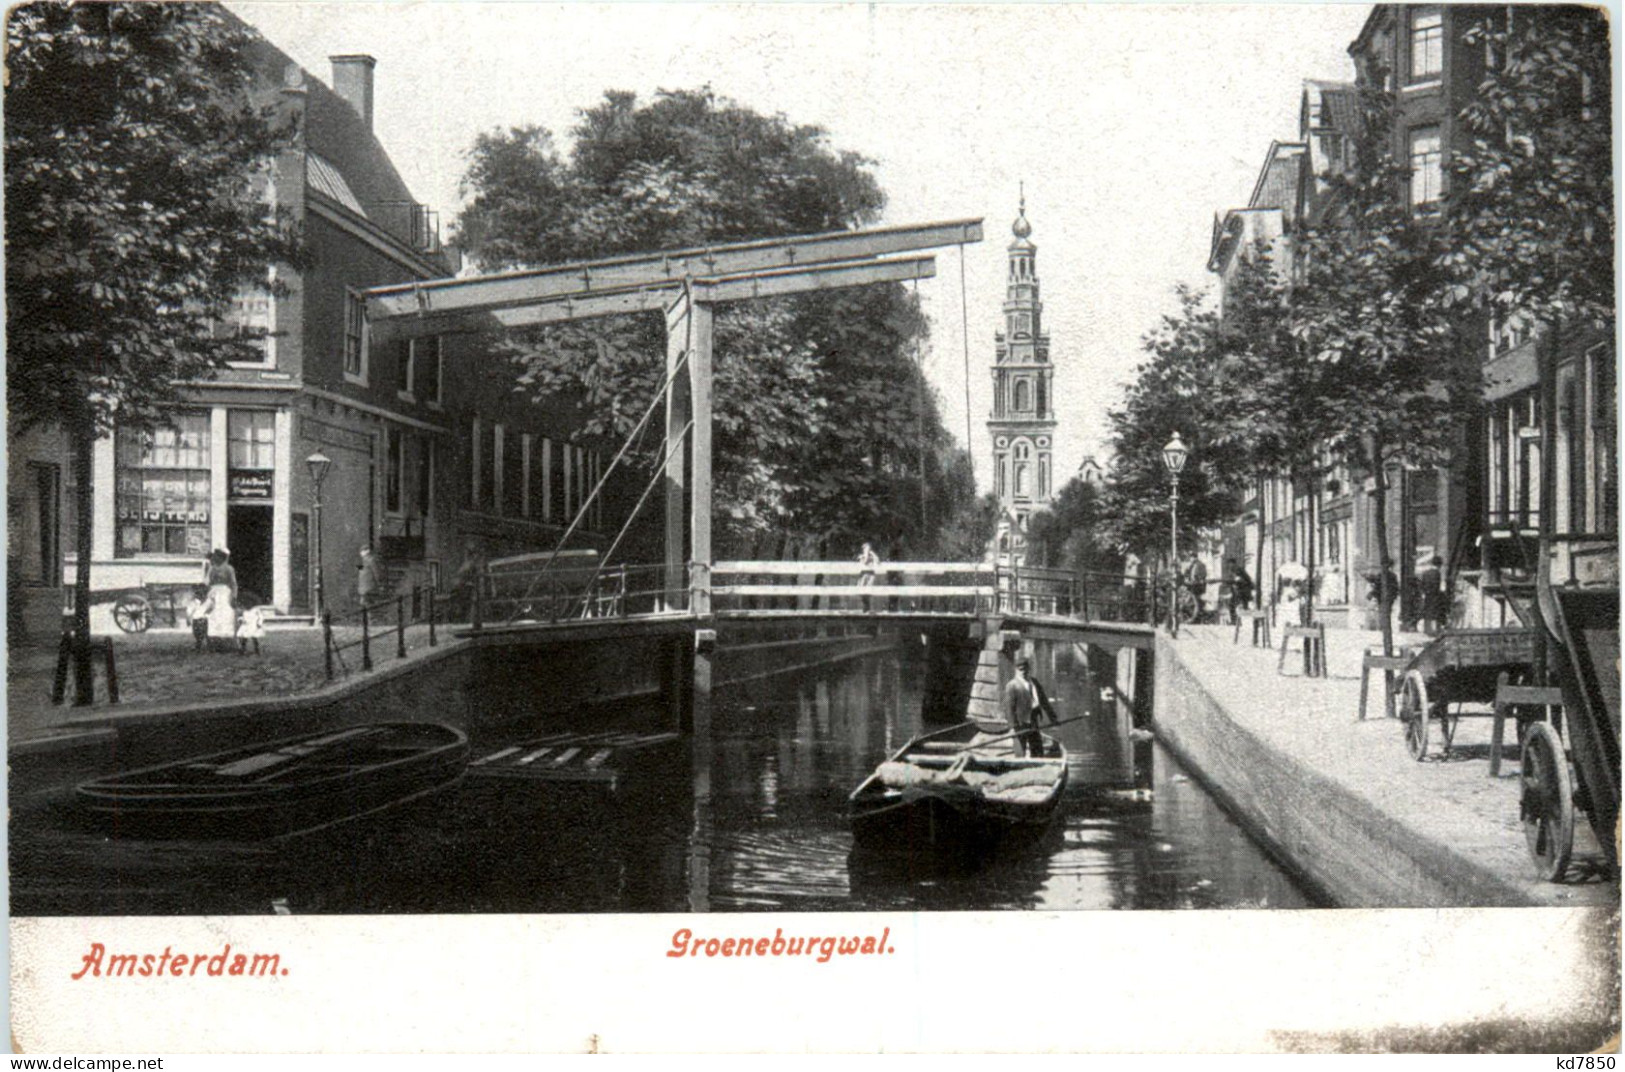 Amsterdam - Groeneburgwal - Amsterdam